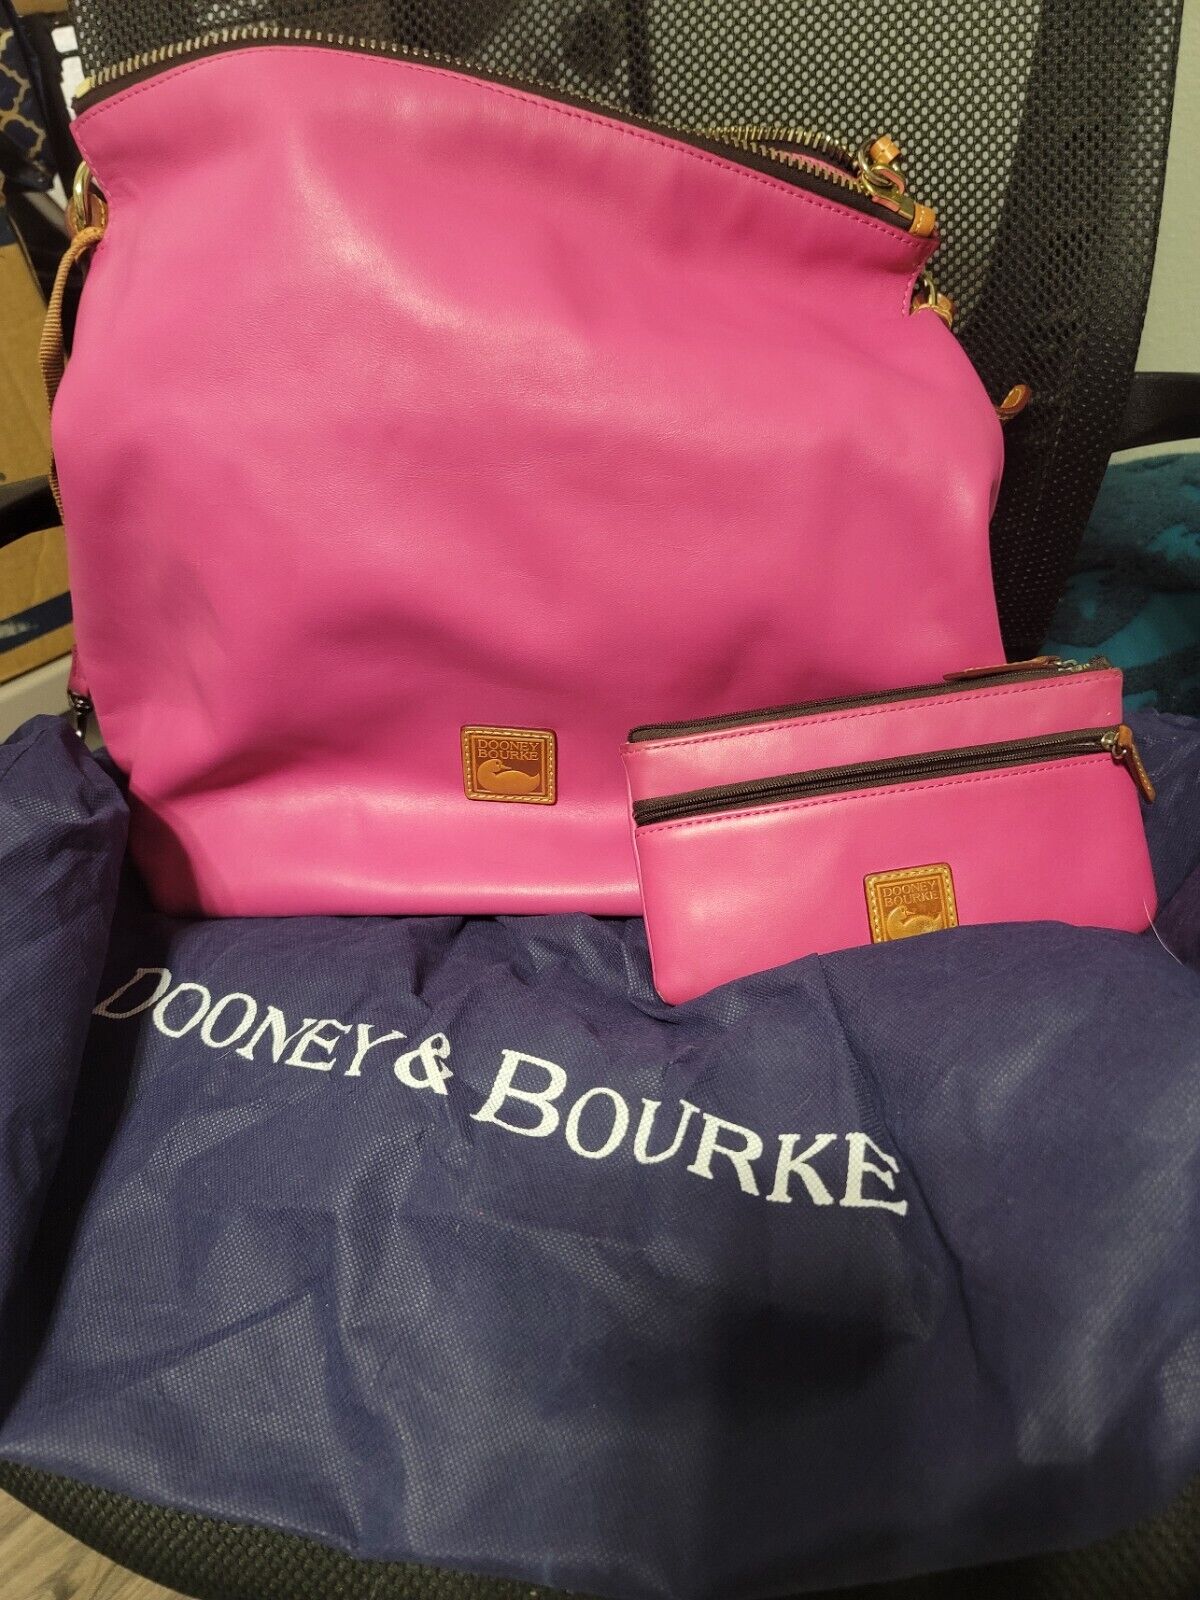 Authentic Dooney & Bourke Handbag PINK with Matching Wallet 